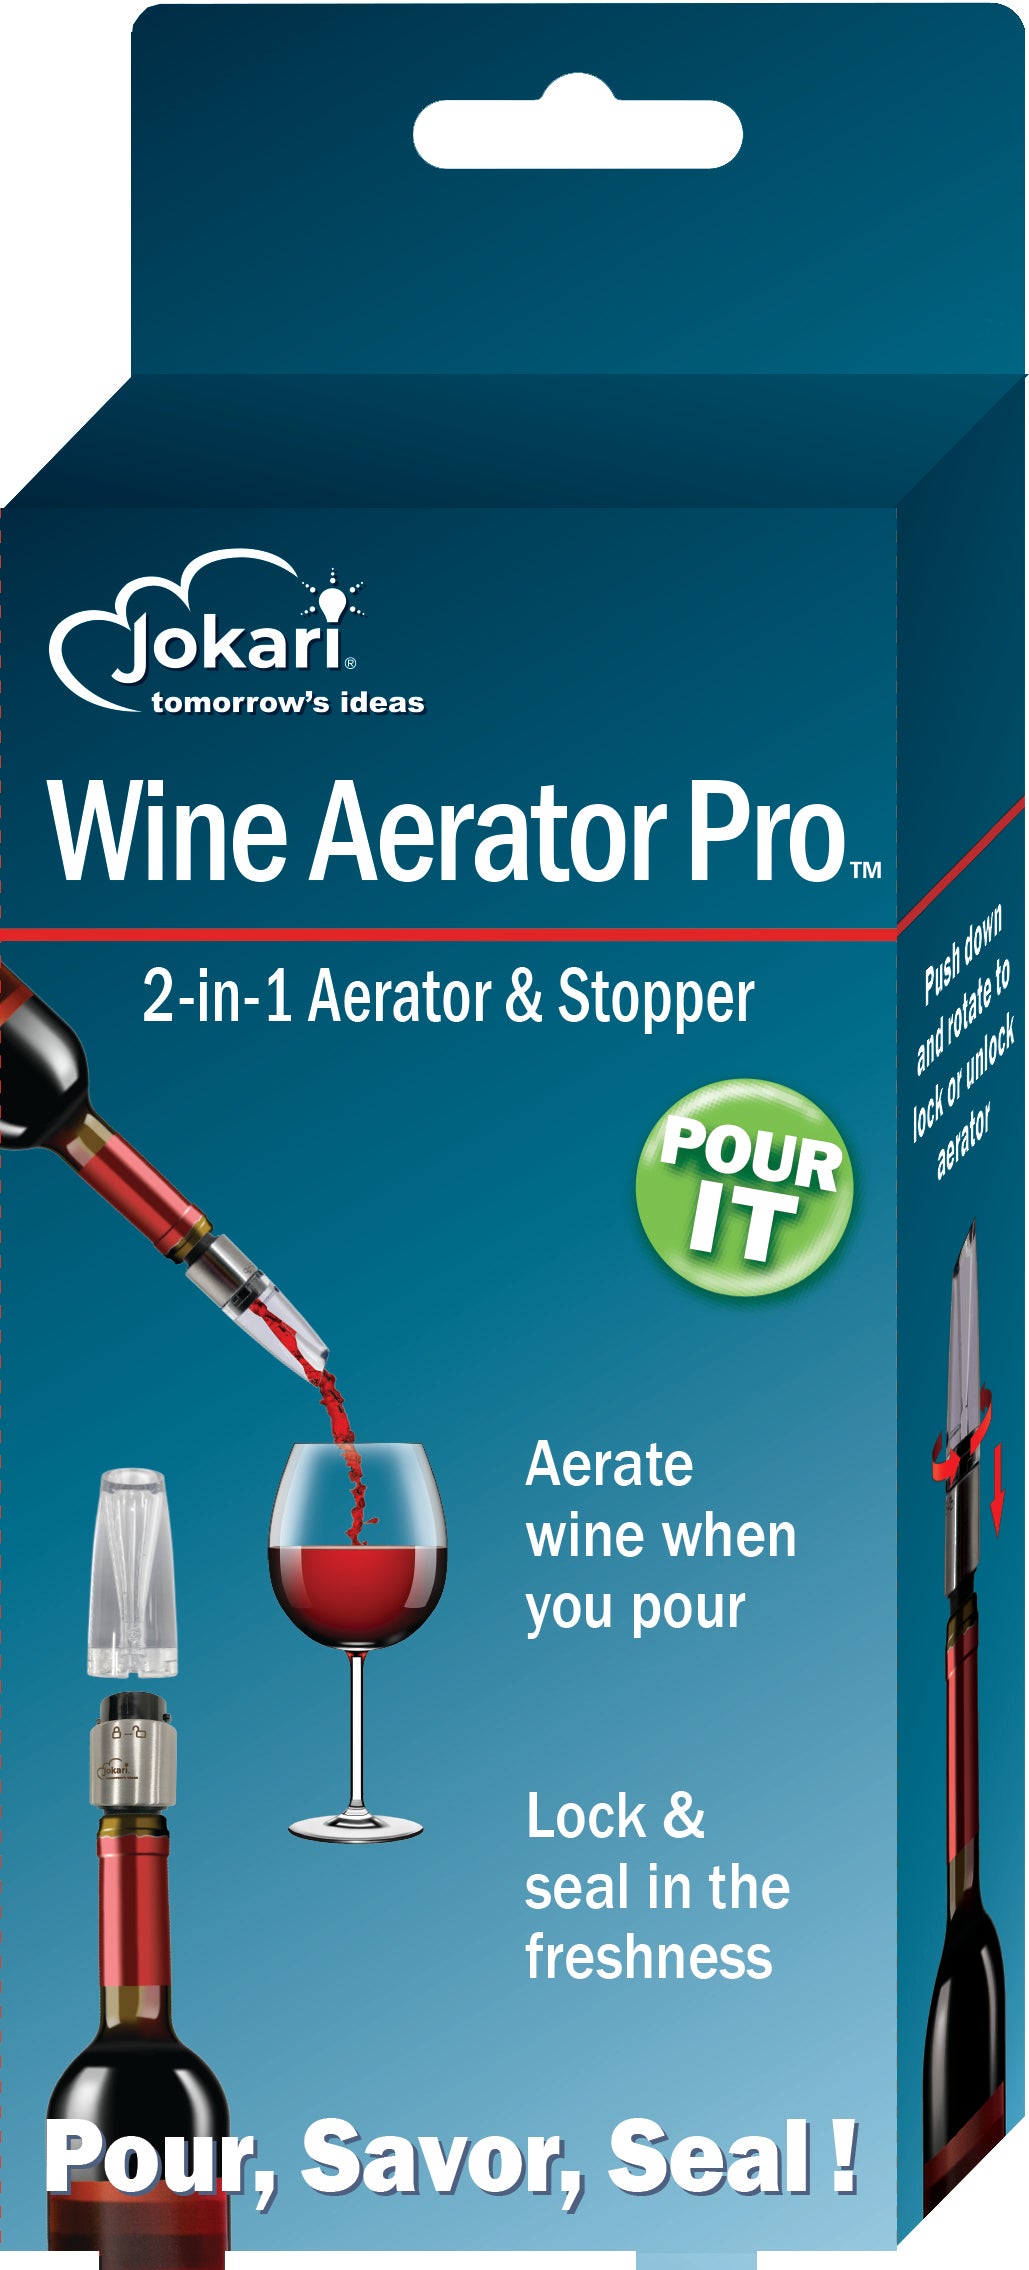 Wine Aerator Pro